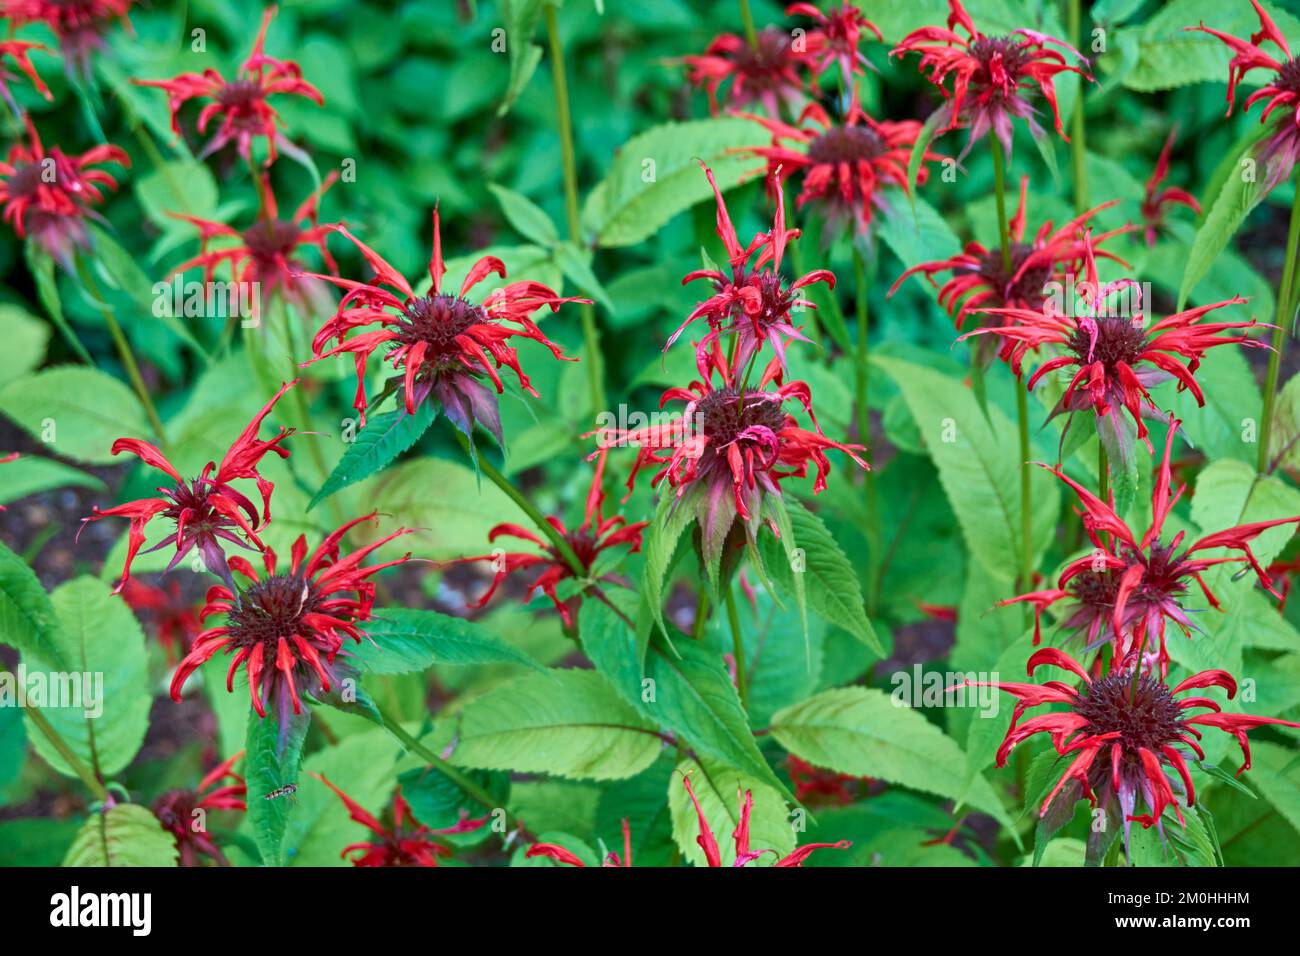 Flowers of aromatic garden perennial plant Monarda Cambridge Scarlet. Stock Photo